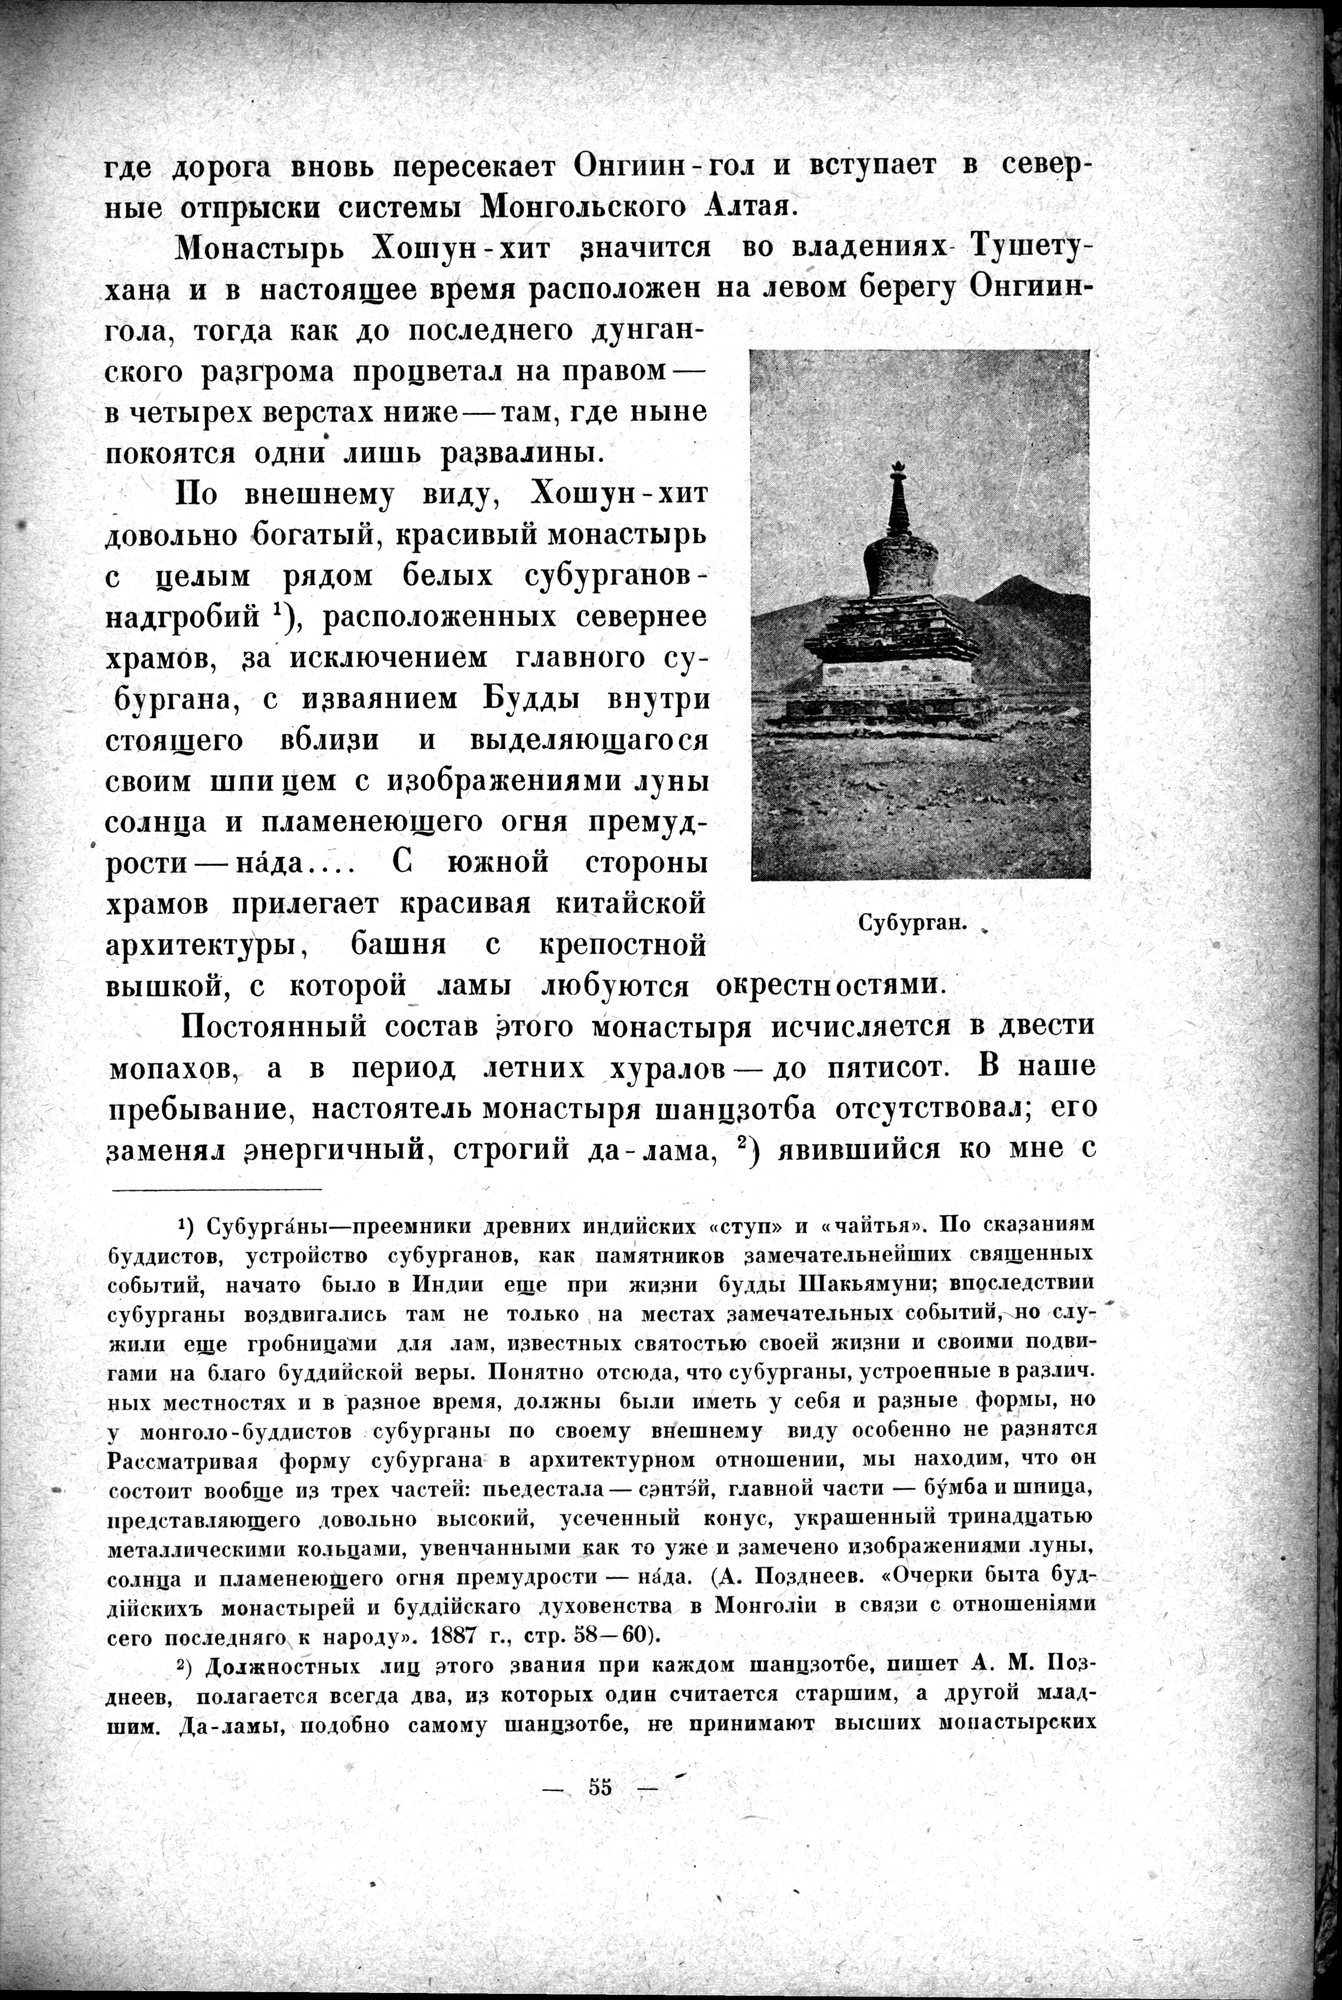 Mongoliya i Amdo i mertby gorod Khara-Khoto : vol.1 / Page 79 (Grayscale High Resolution Image)